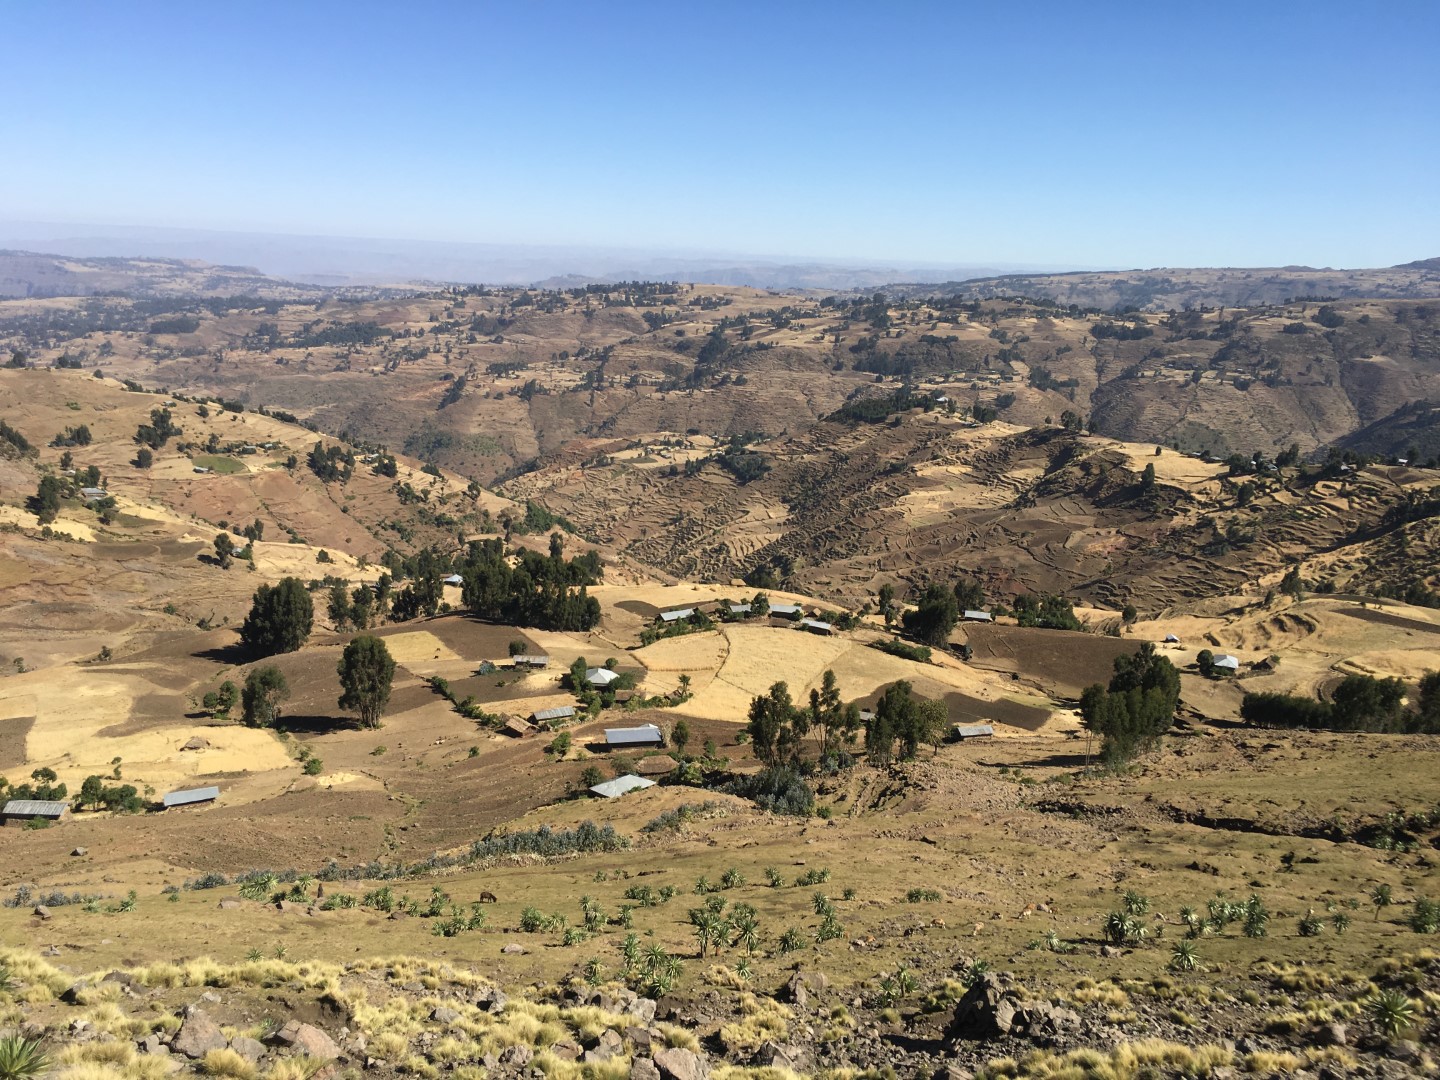 Highland Ethiopia: Degraded mountainous land